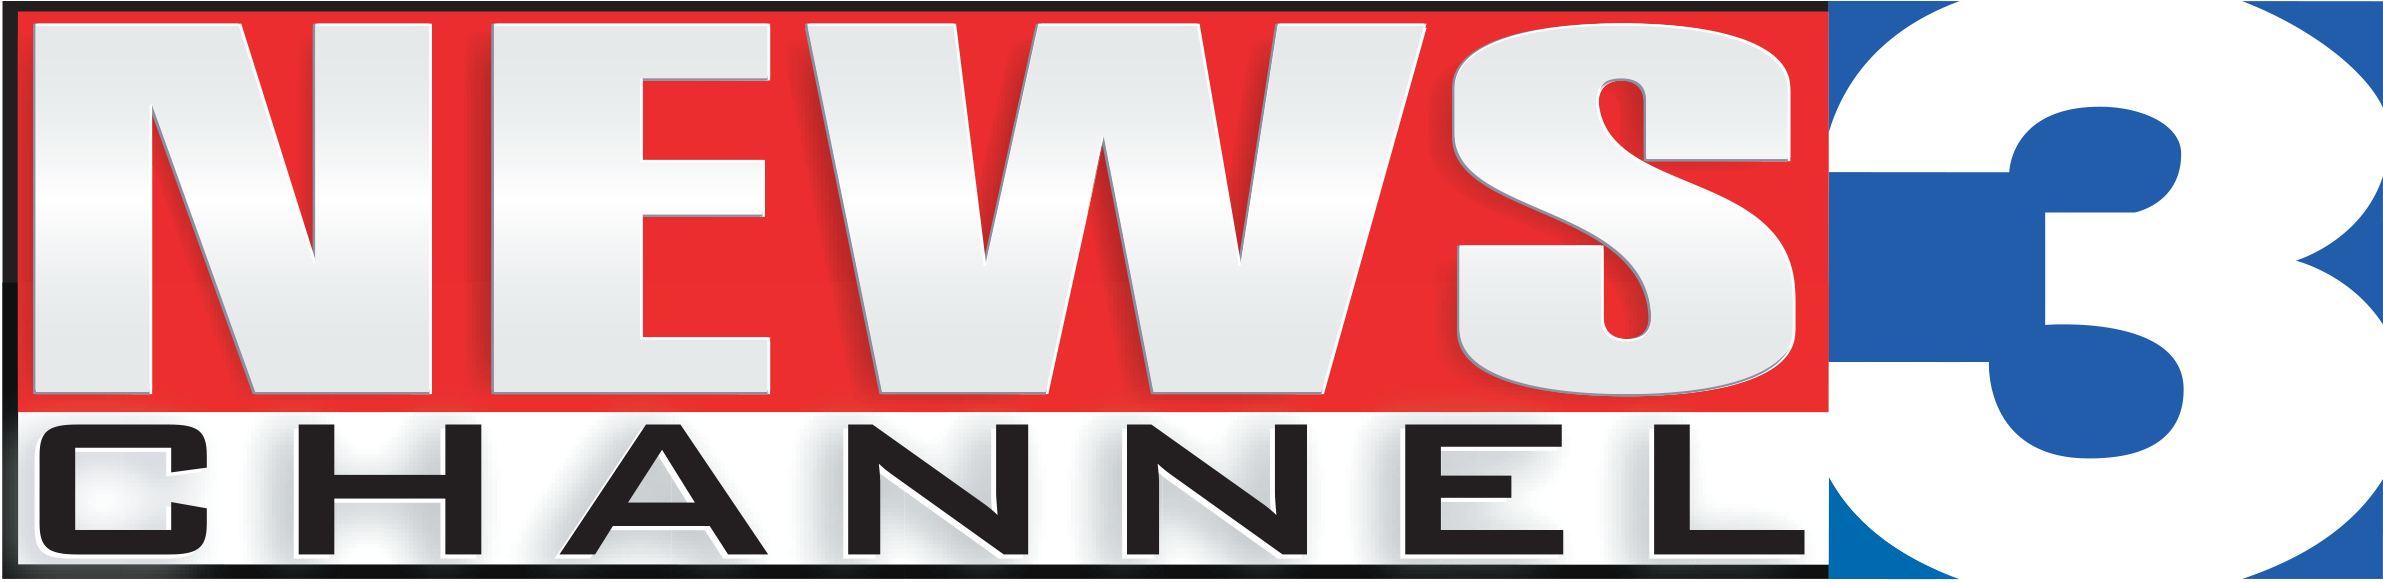 WREG.com | News Channel 3 | Memphis News and Weather | Memphis, TN